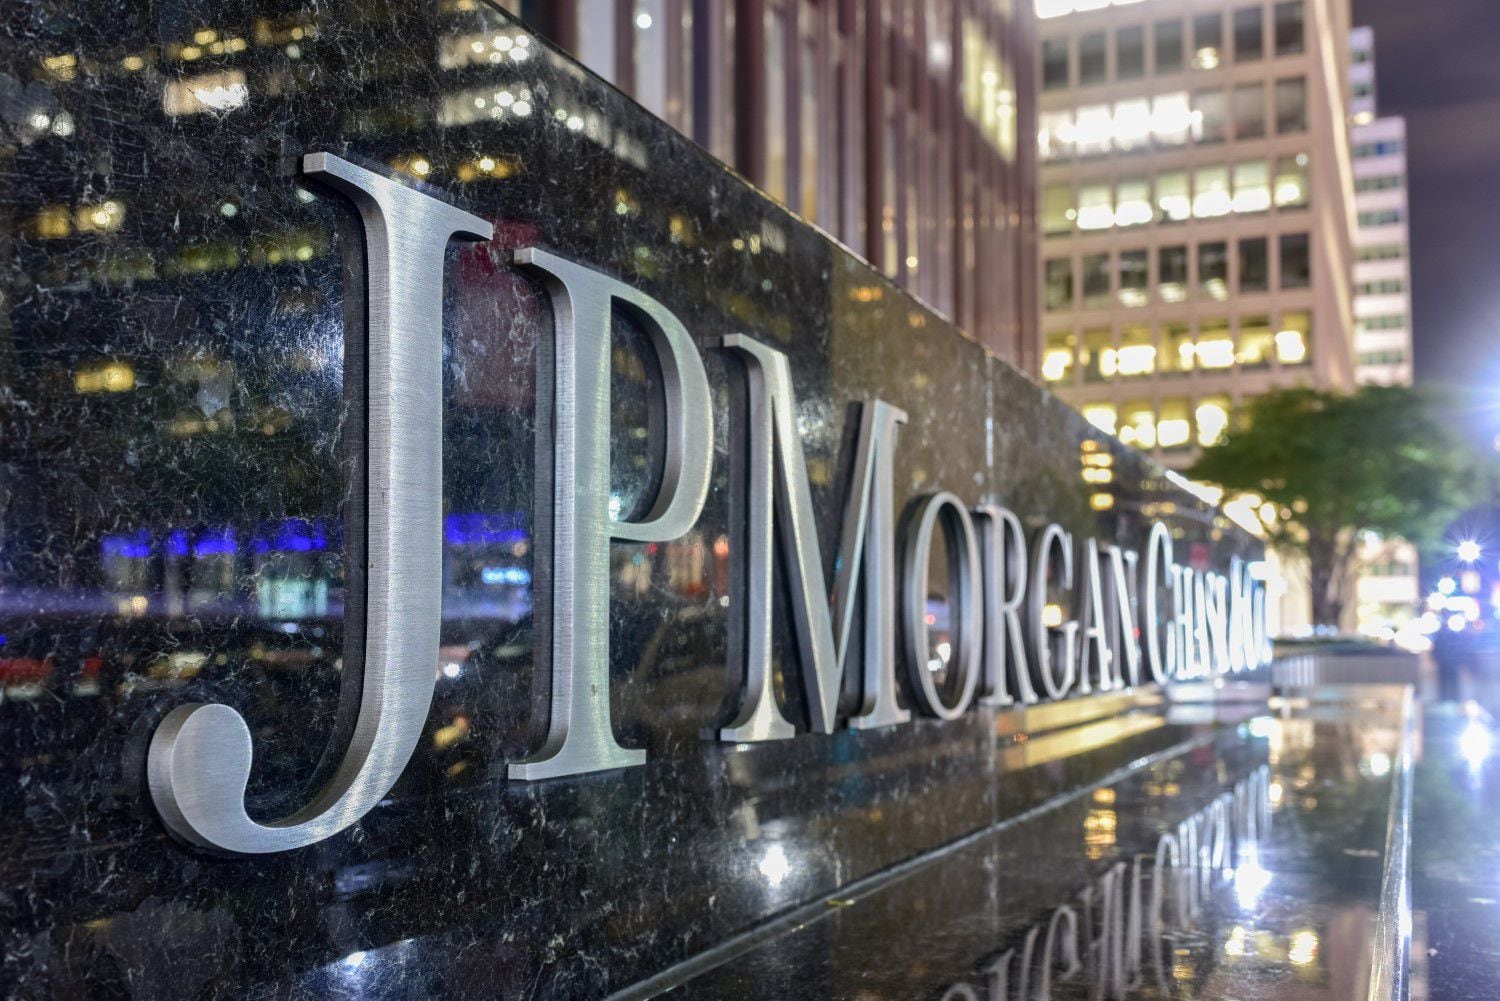 JPMorgan to Develop Payment Blockchain System for Siemens ...